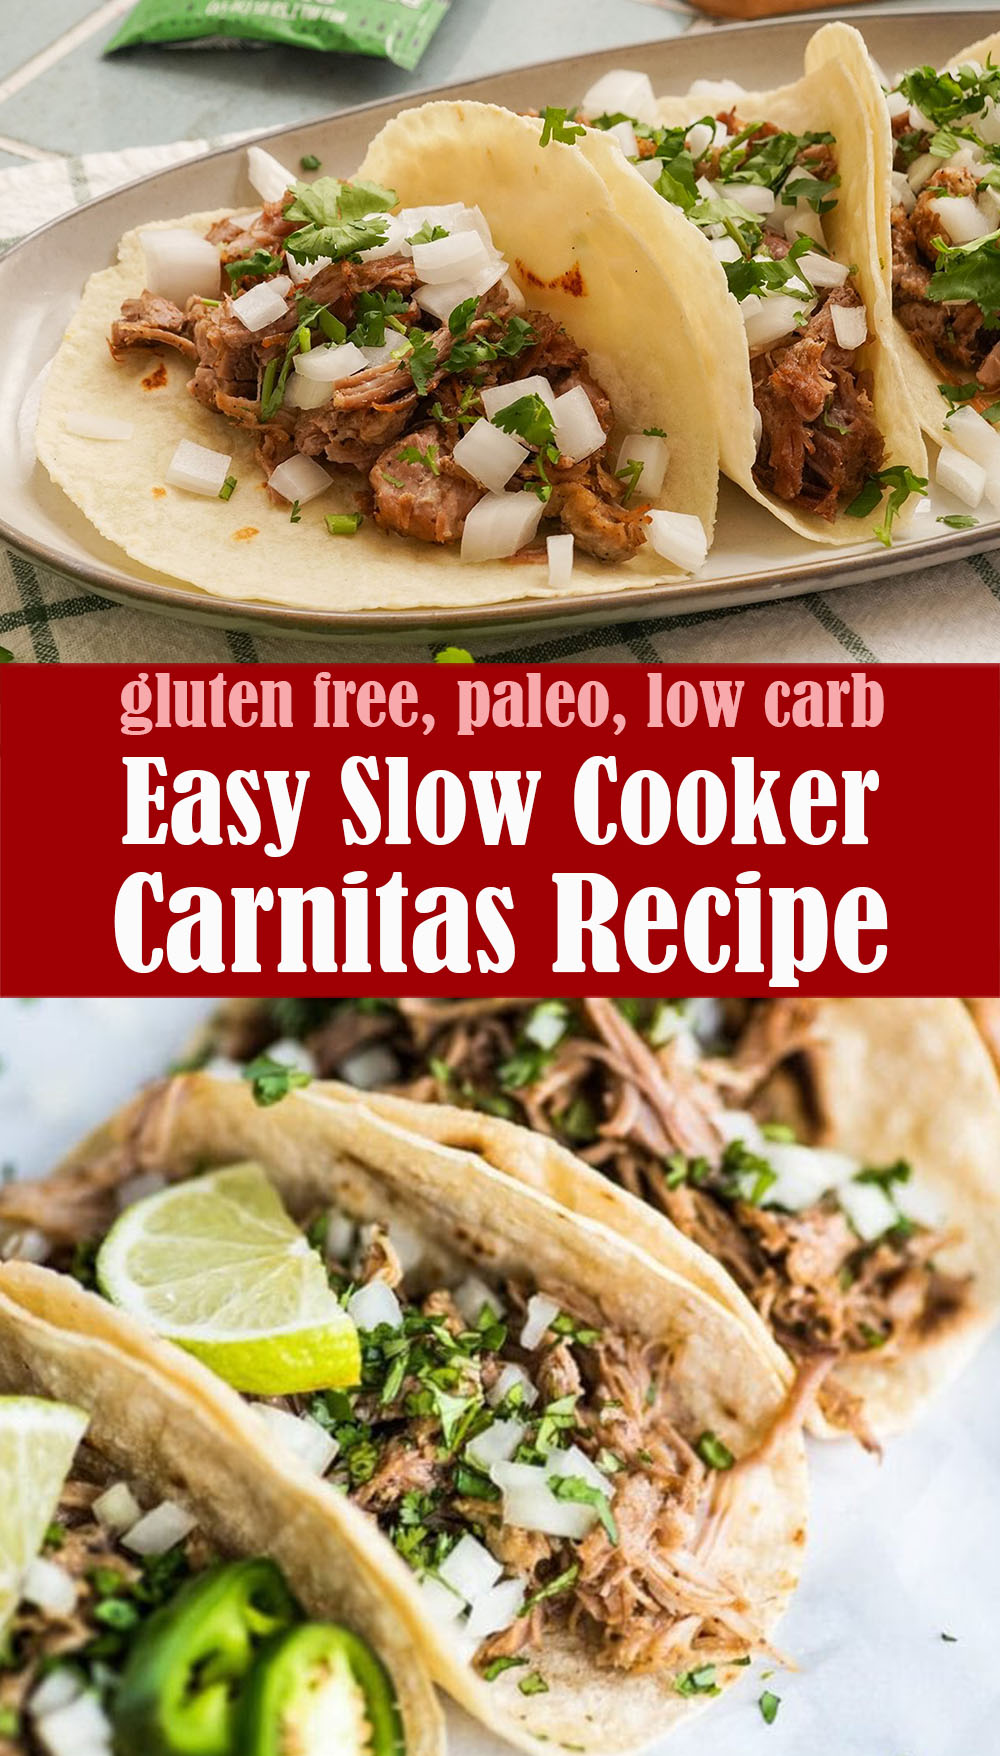 Easy Slow Cooker Carnitas Recipe